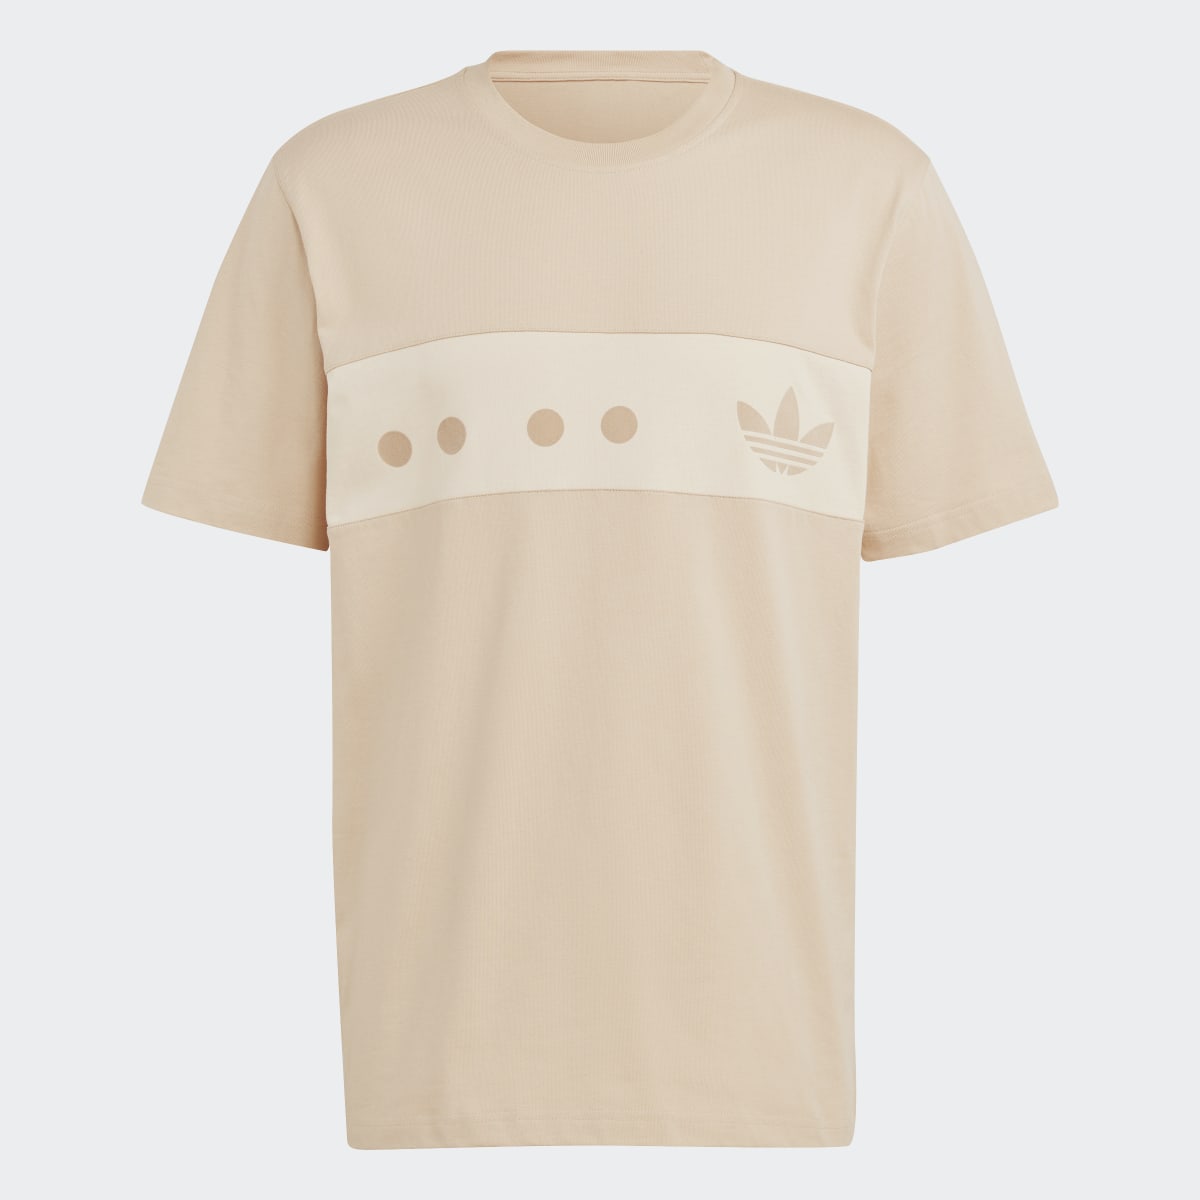 Adidas RIFTA City Boy T-Shirt. 6